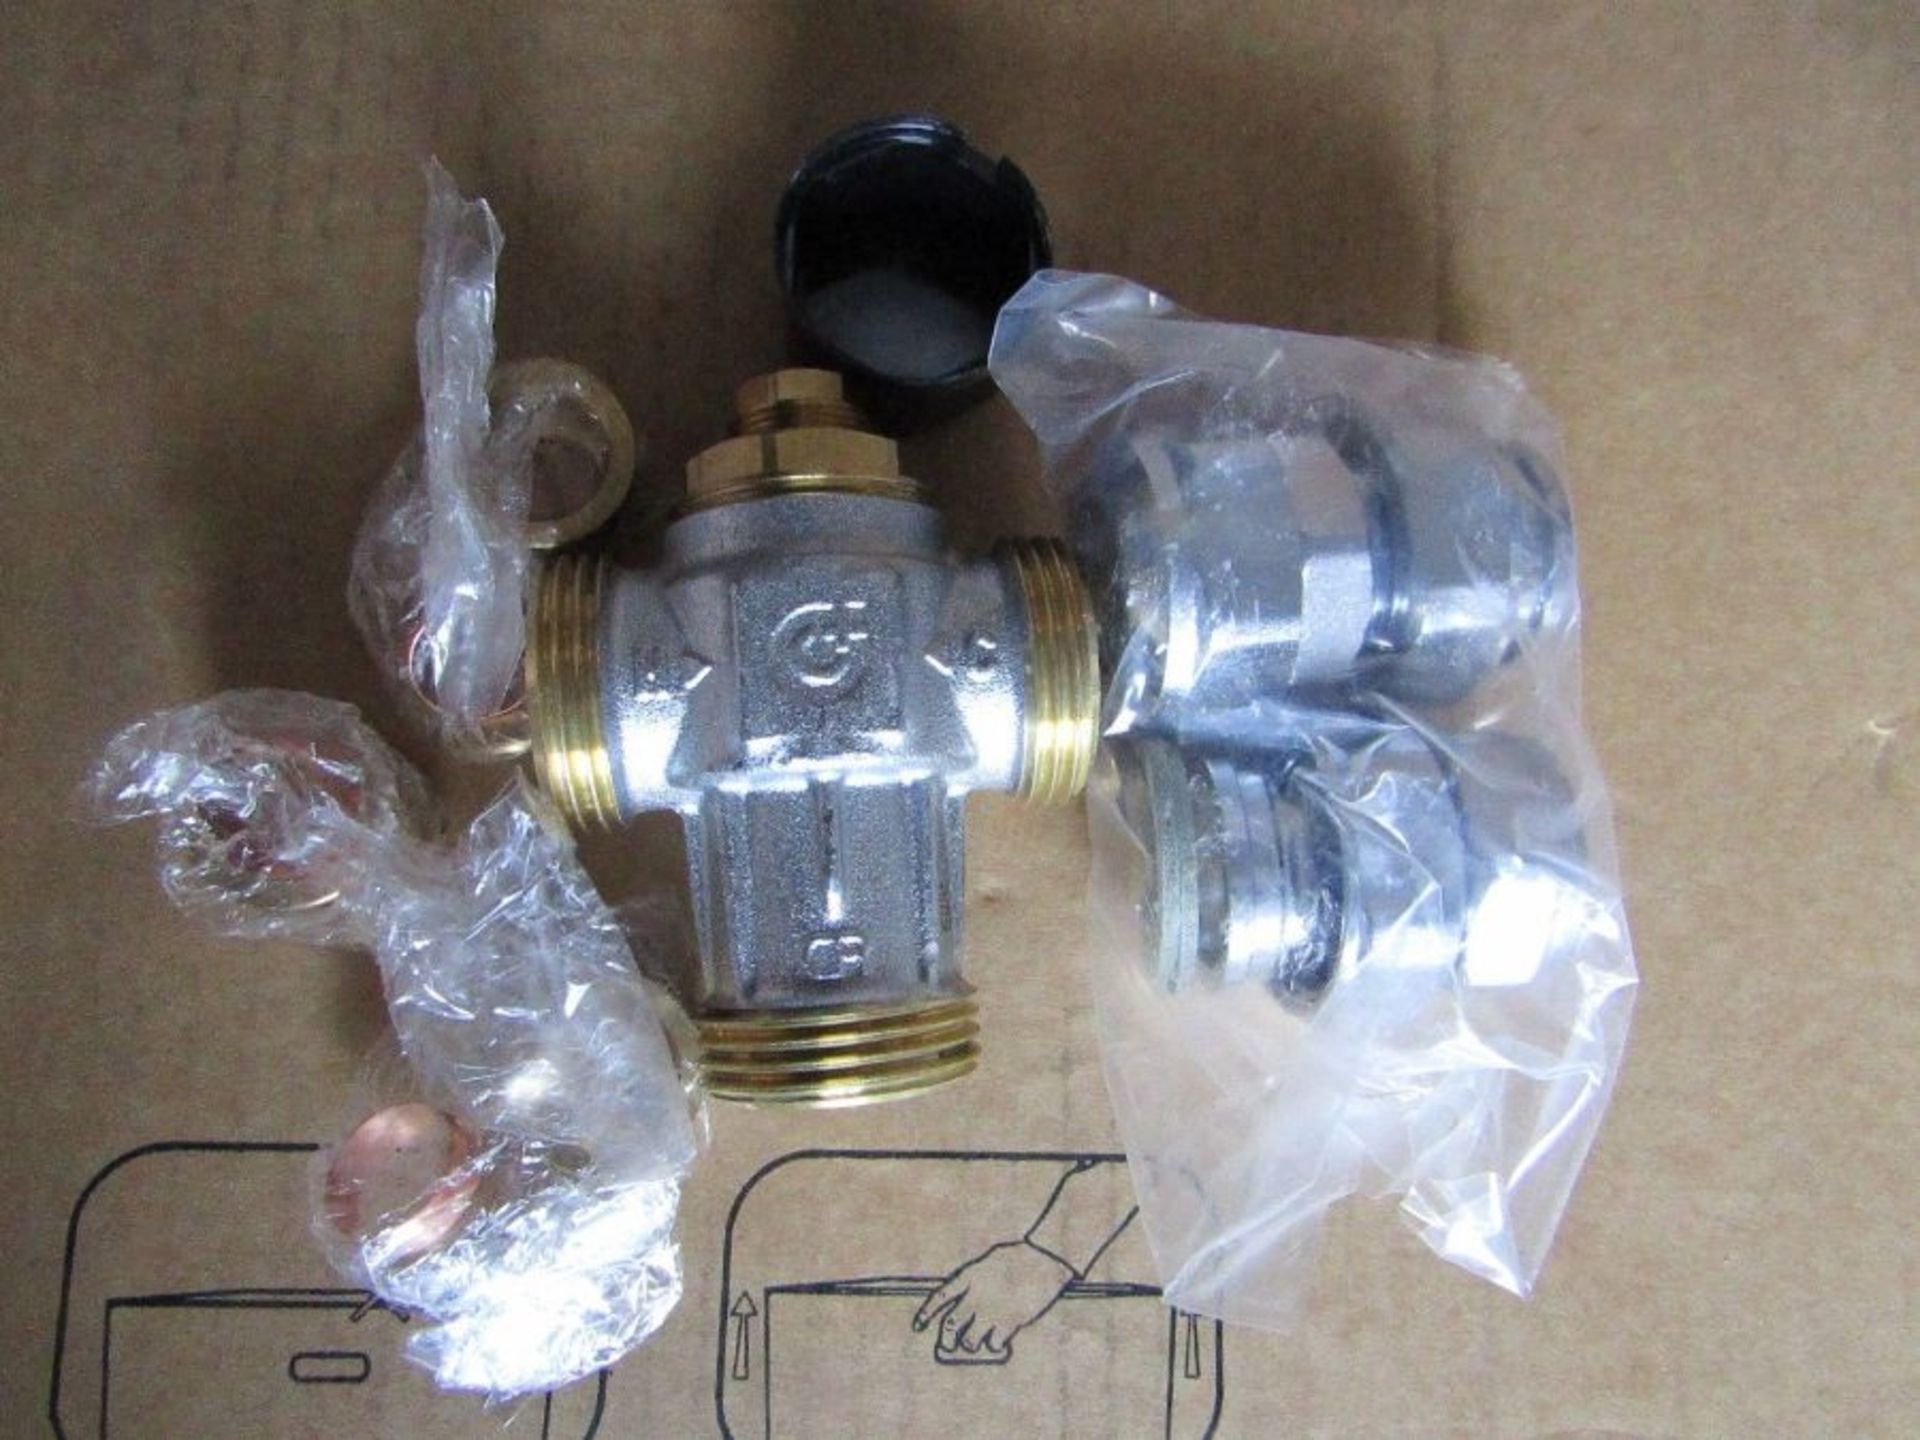 30 x Altecnic Brass Thermostatic Washroom Mixing Valve 22mm Compression H9554 7770368